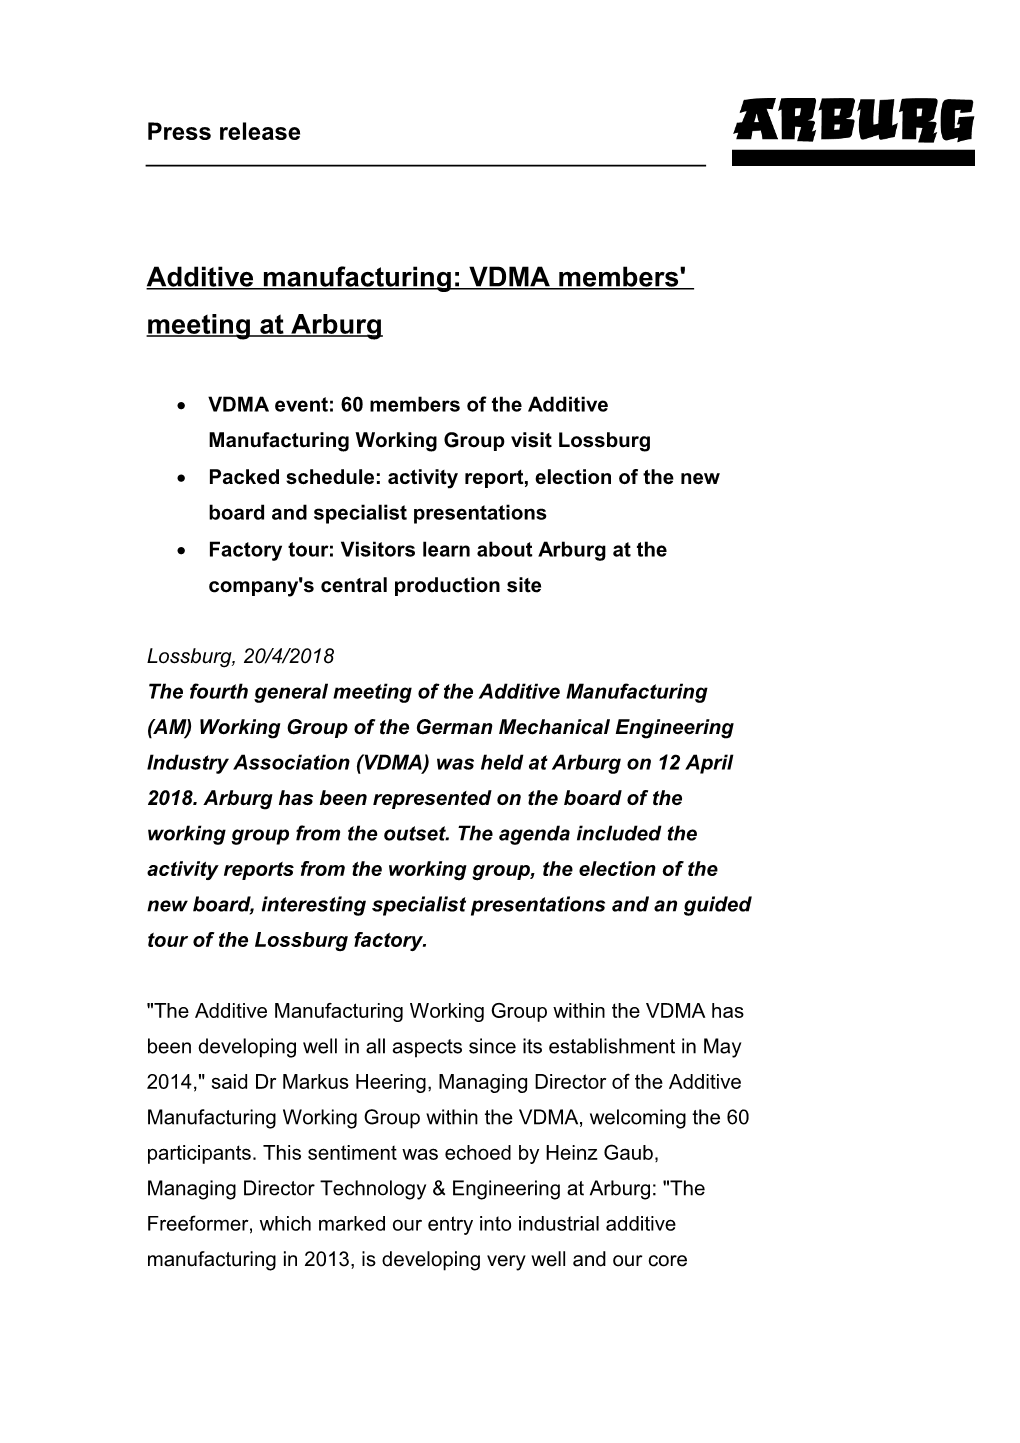 Additive Manufacturing: VDMA Members' Meeting at Arburg